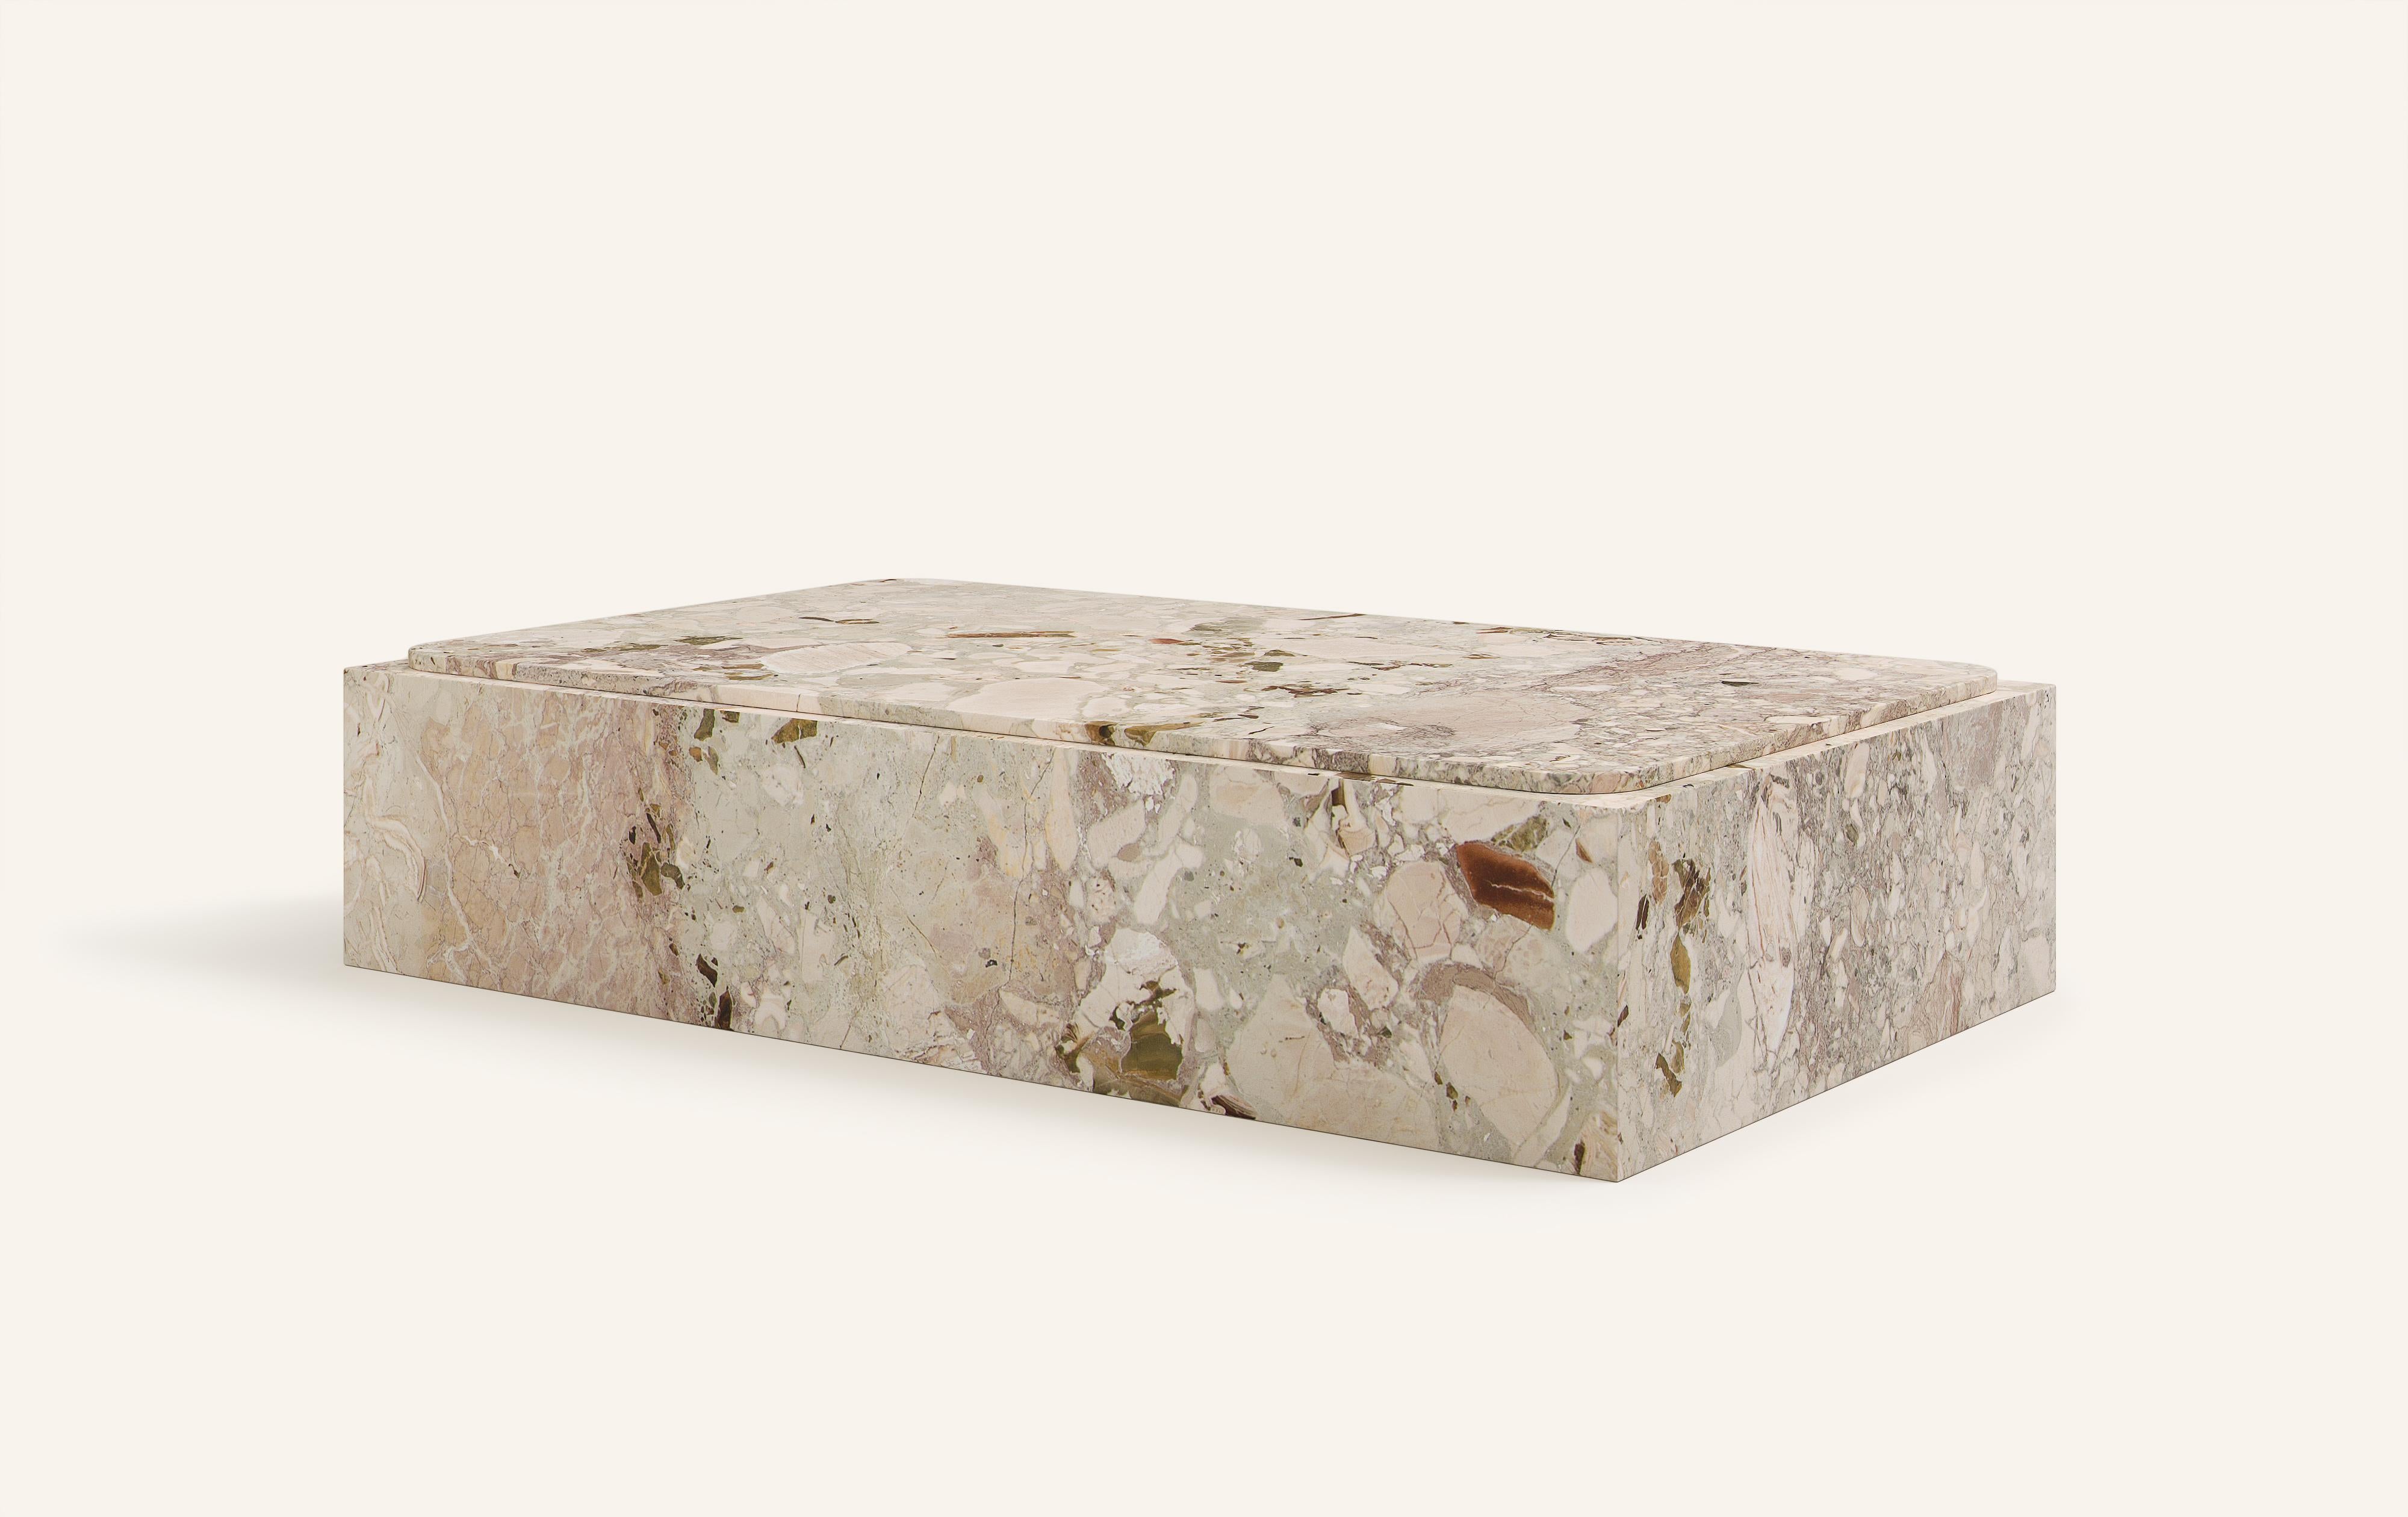 Organic Modern FORM(LA) Cubo Rectangle Plinth Coffee Table 60”L x 36”W x 13”H Breccia Marble For Sale